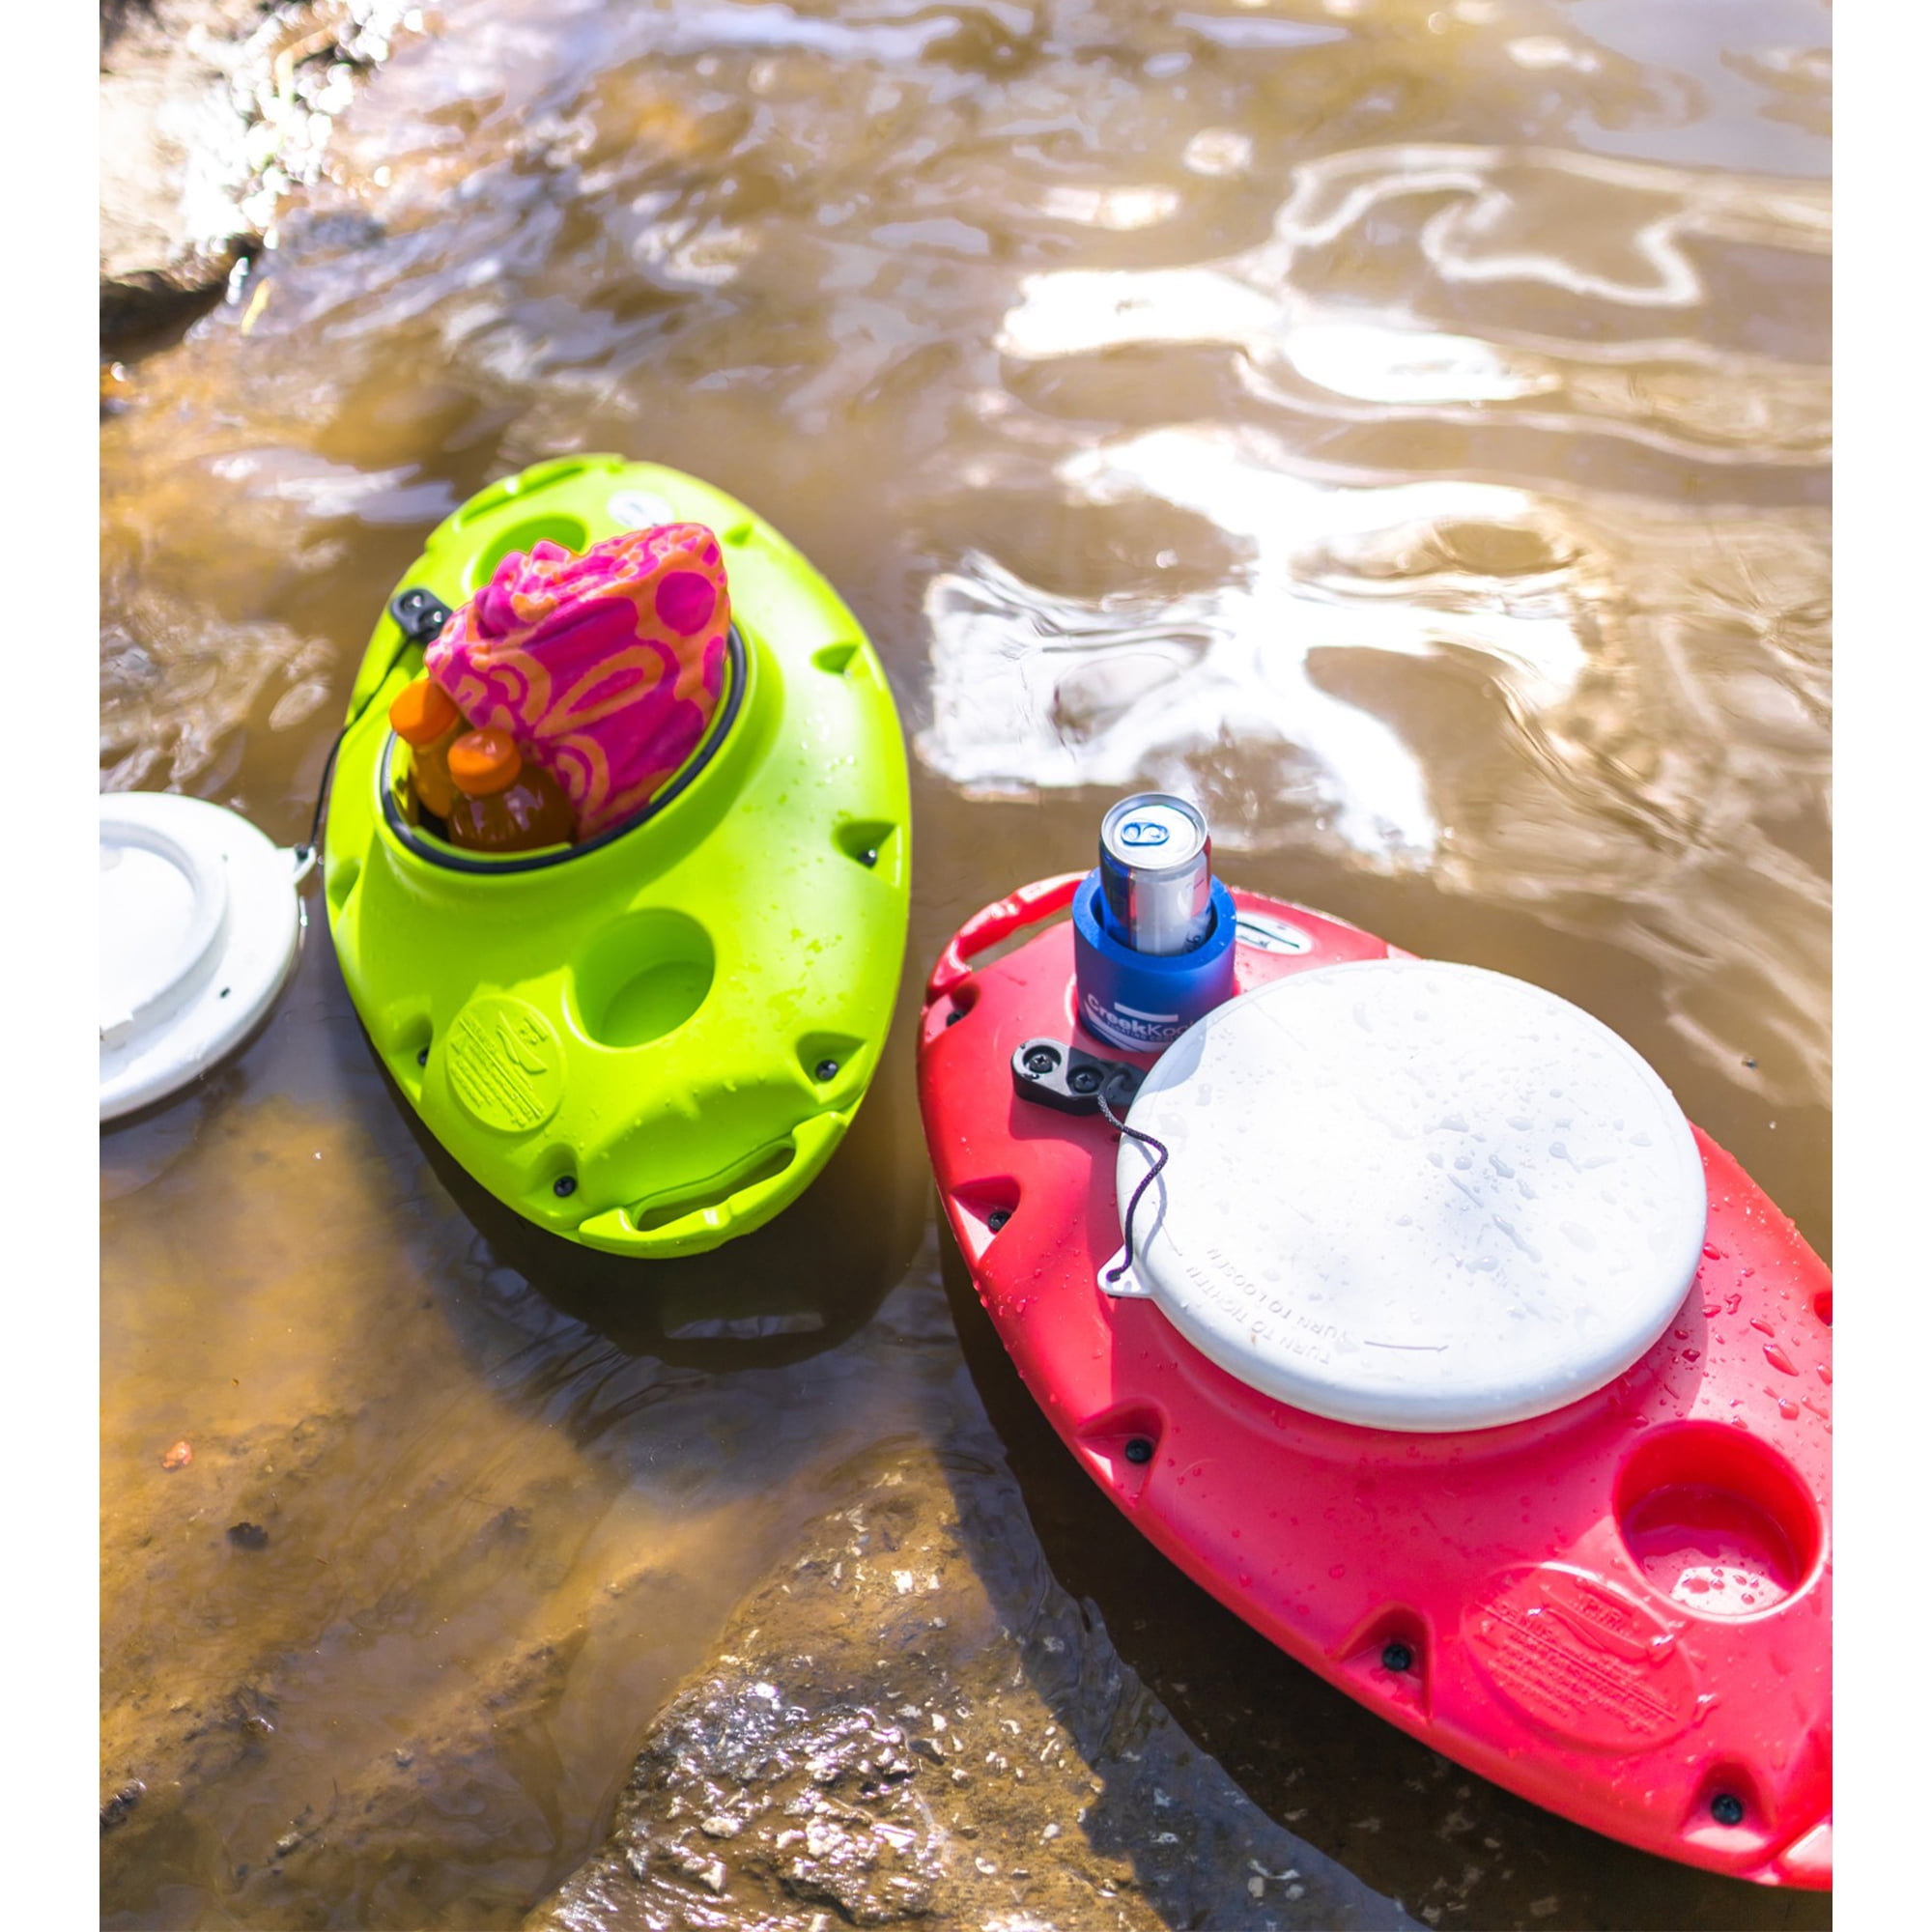 CreekKooler 30 Quart Floating Insulated Beverage Cooler Pull Behind Kayak,  Tan, 1 Piece - Kroger